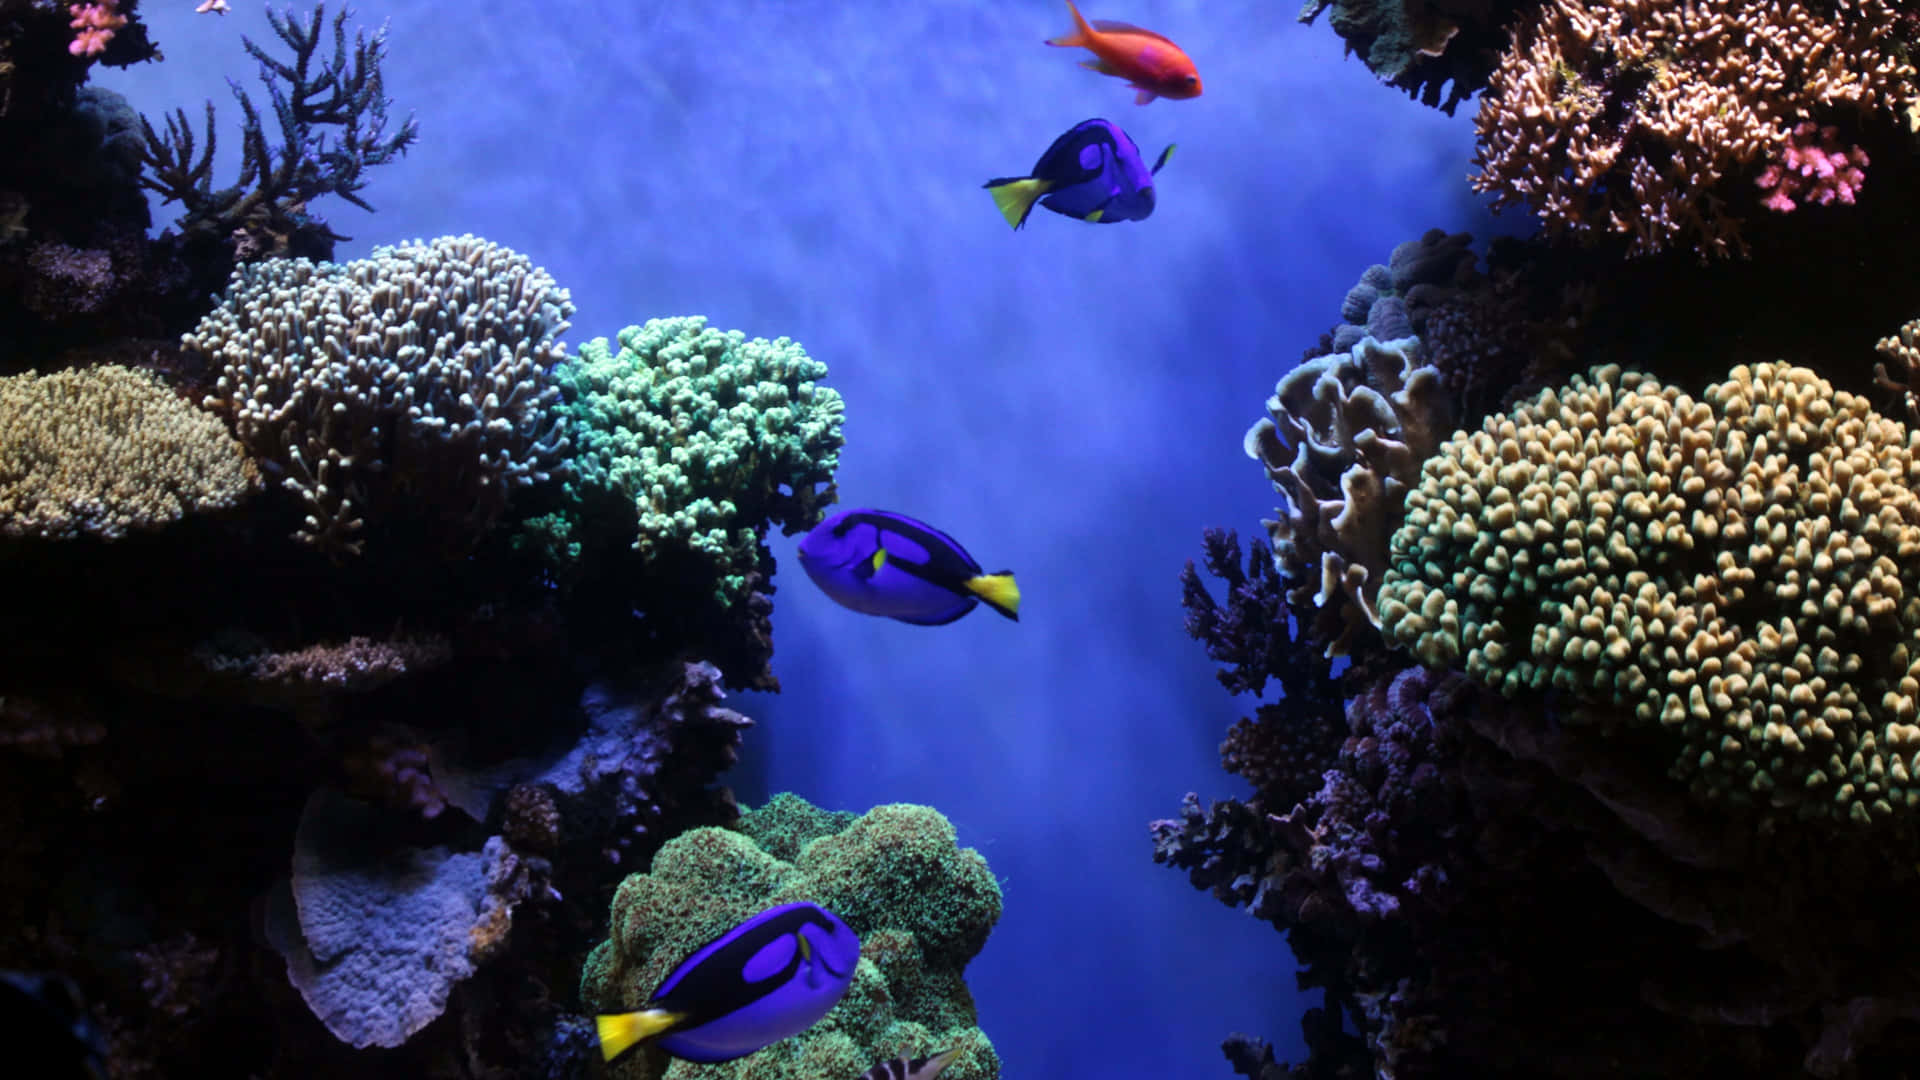 Majestuosoarrecife De Coral Con Un Colorido Fondo De Peces Fondo de pantalla